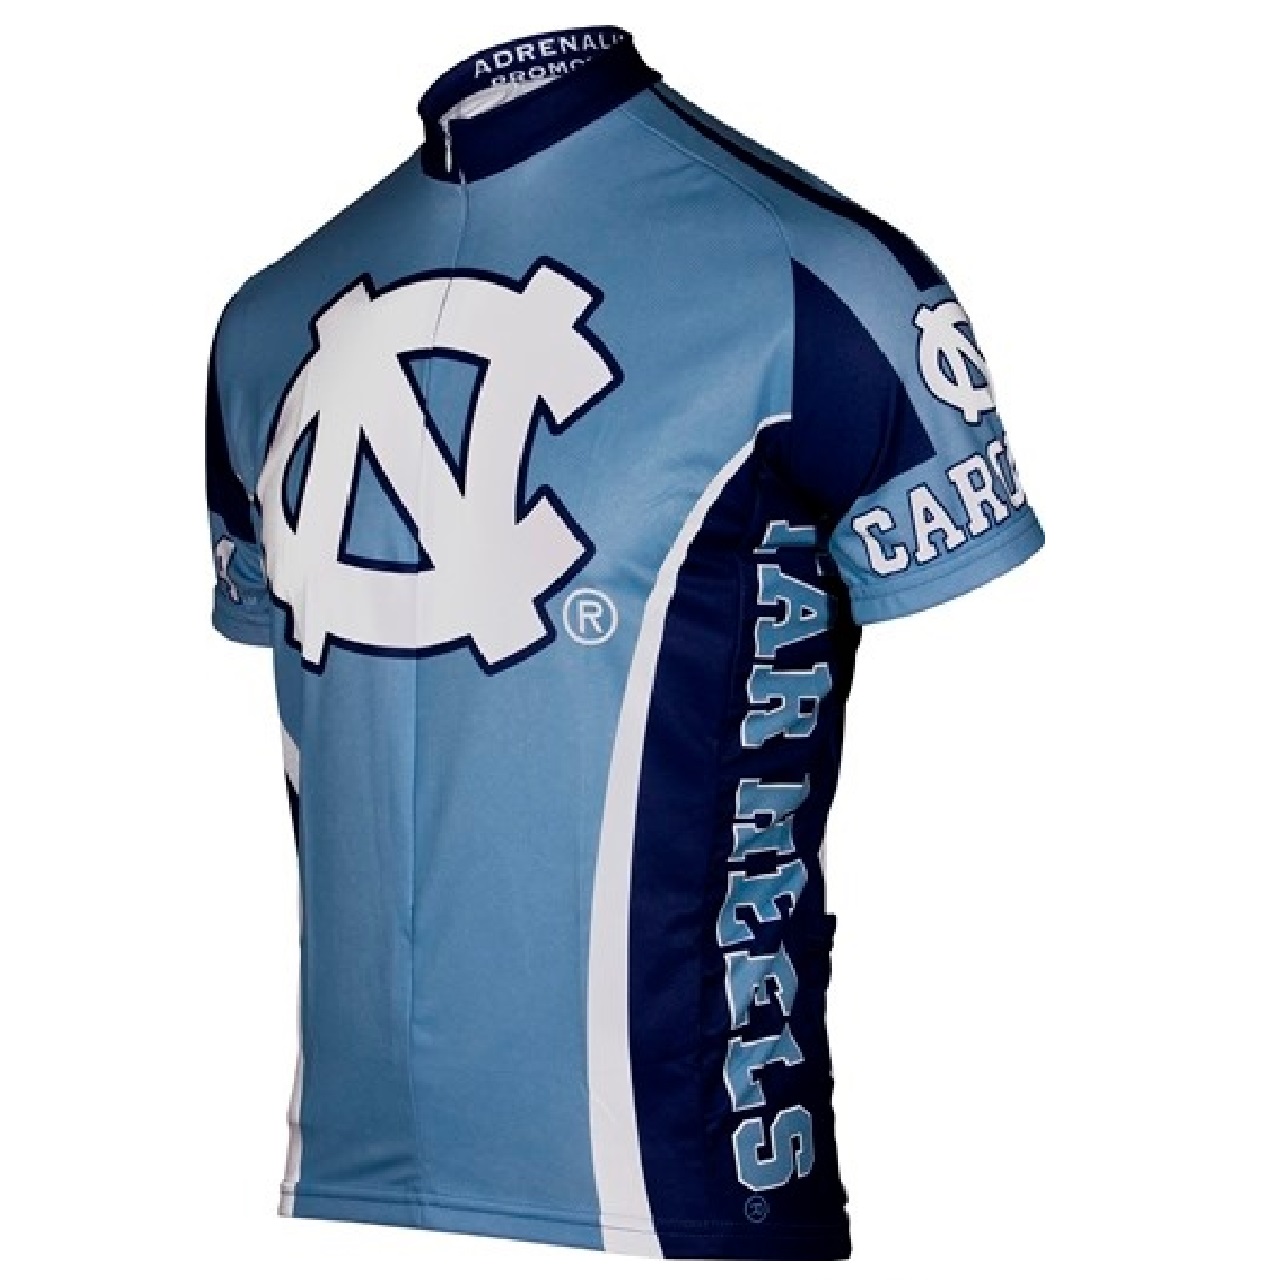 Adrenaline Promo University of North Carolina College 3/4 zip Men's Cycling Jersey